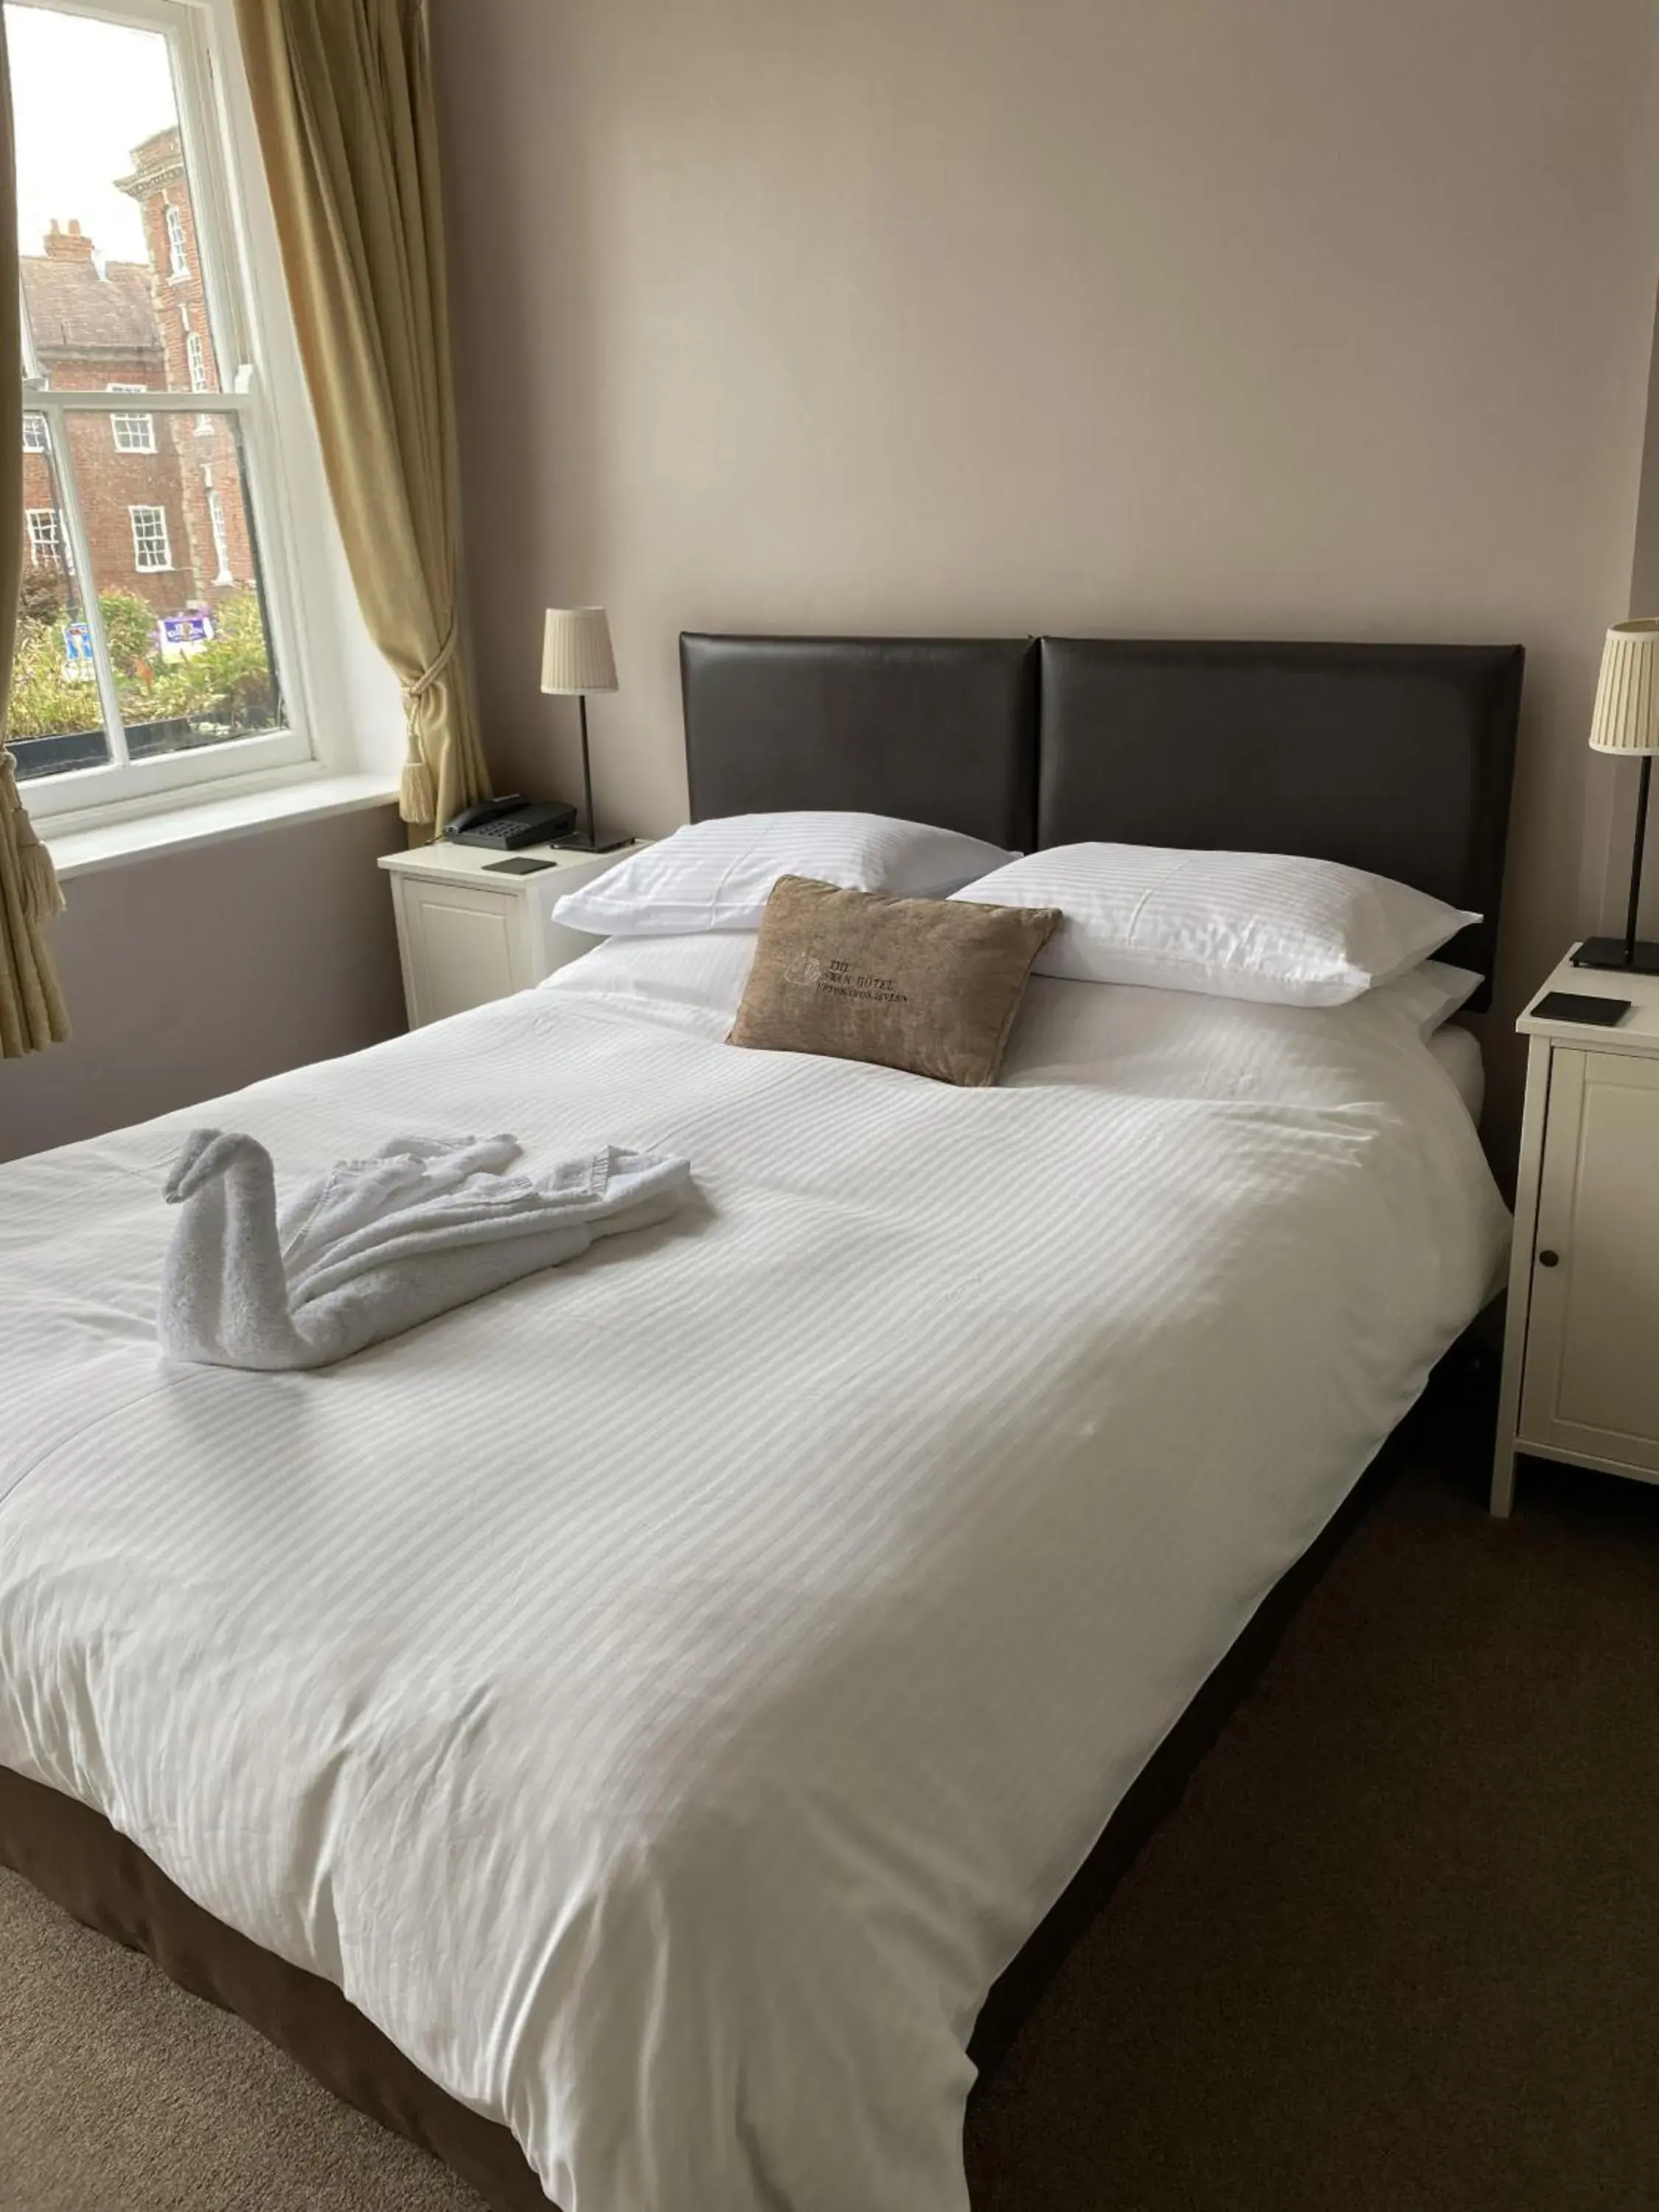 Standard King Room - single occupancy in The Swan Hotel